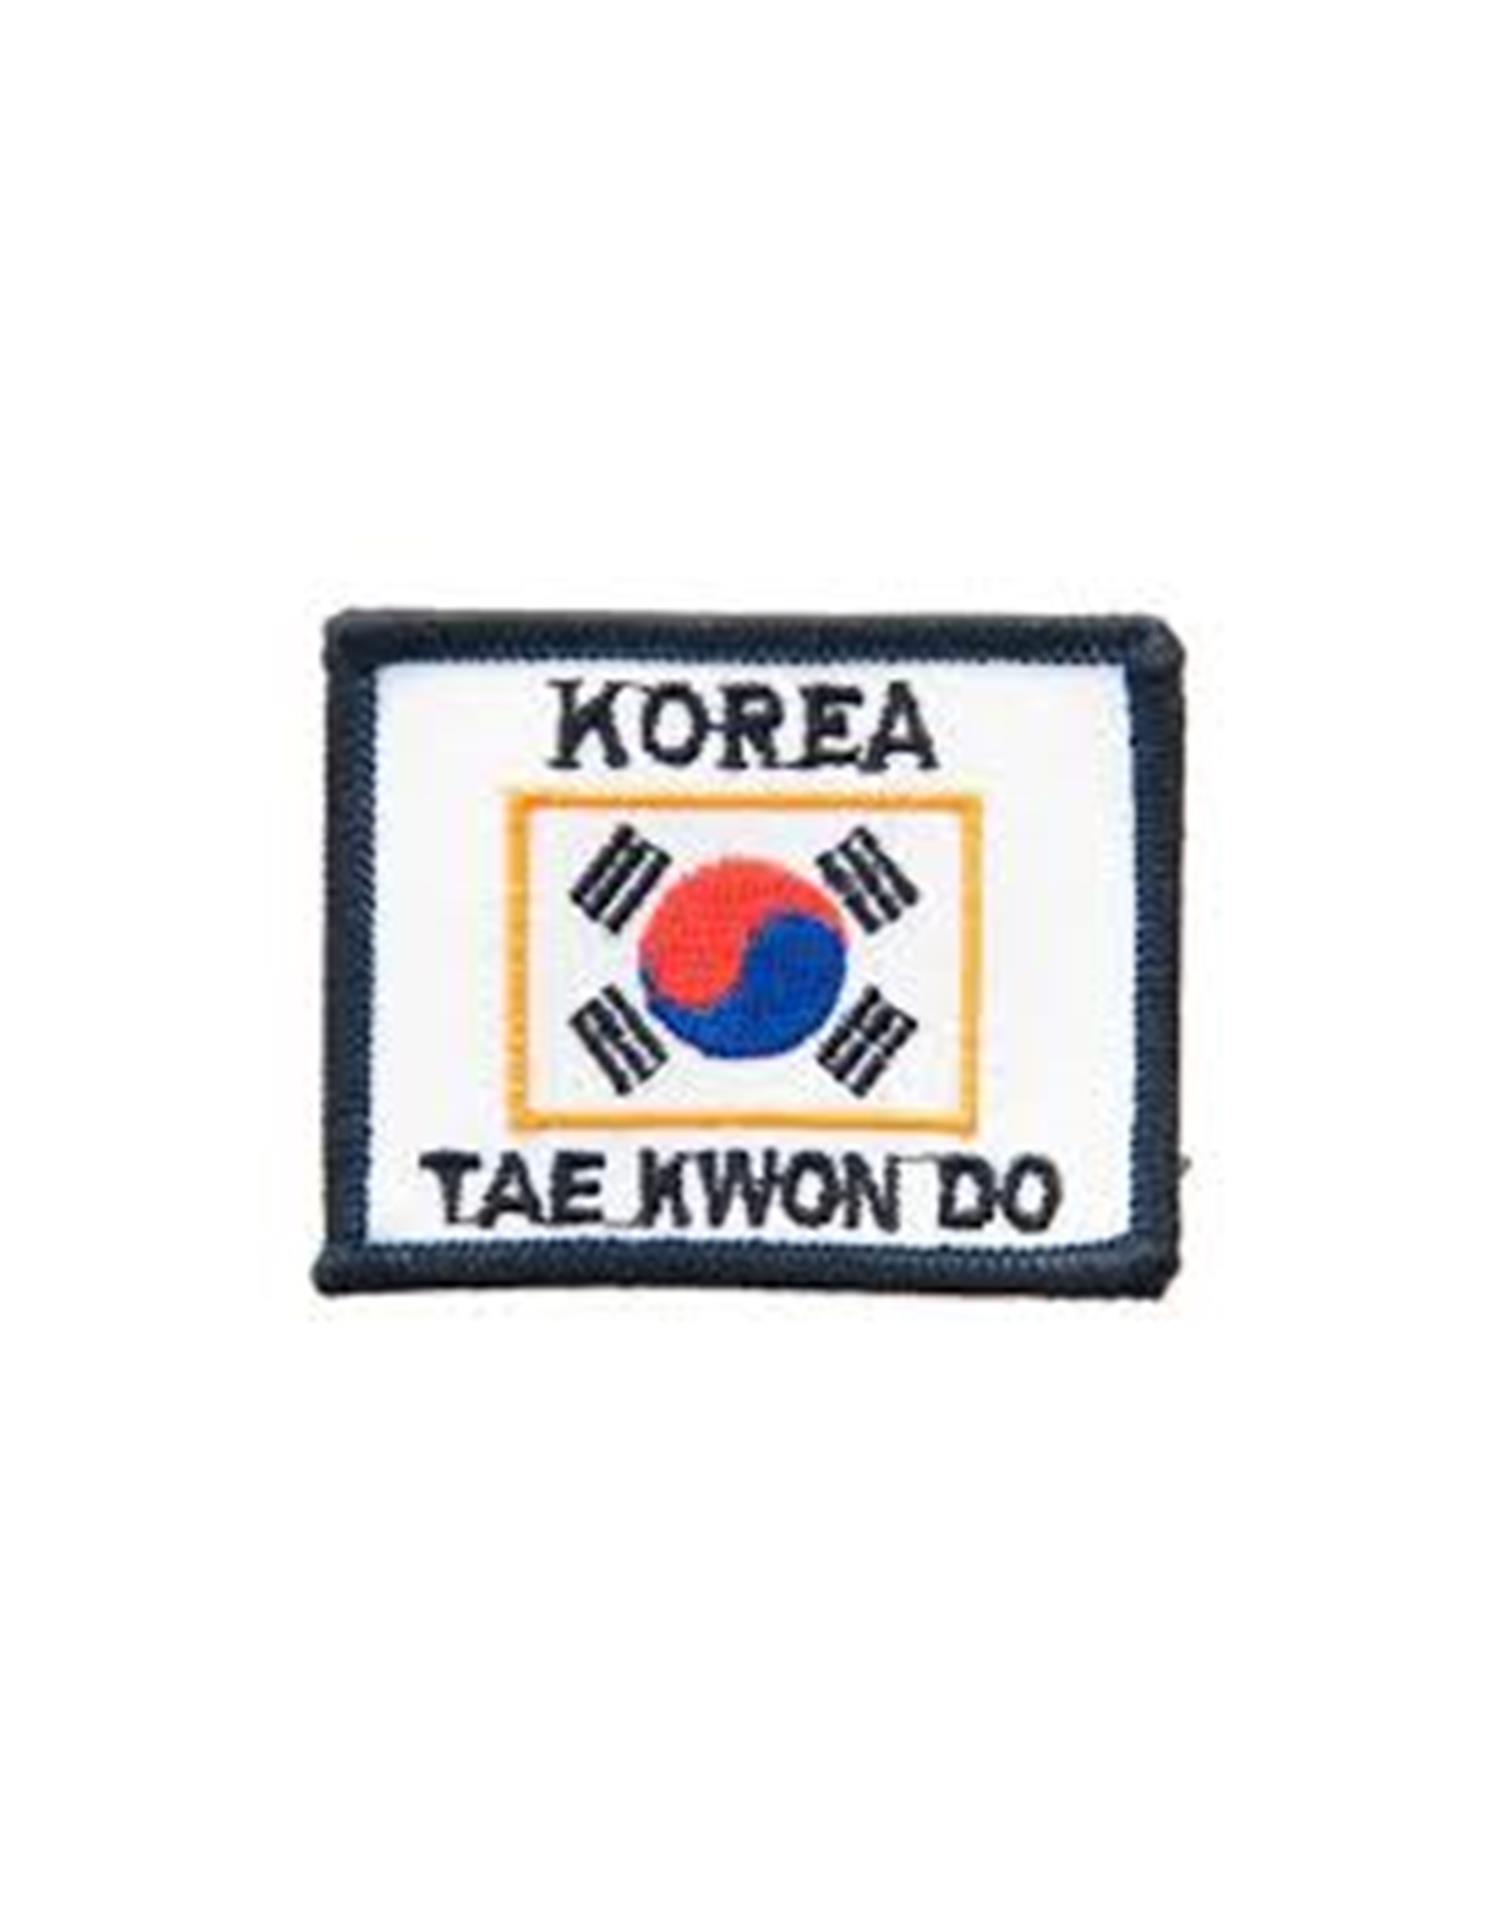 Dae Do Bandiera koreana piu scritta  korea e taekwndo  (8 * 8 cm - BIANCO)